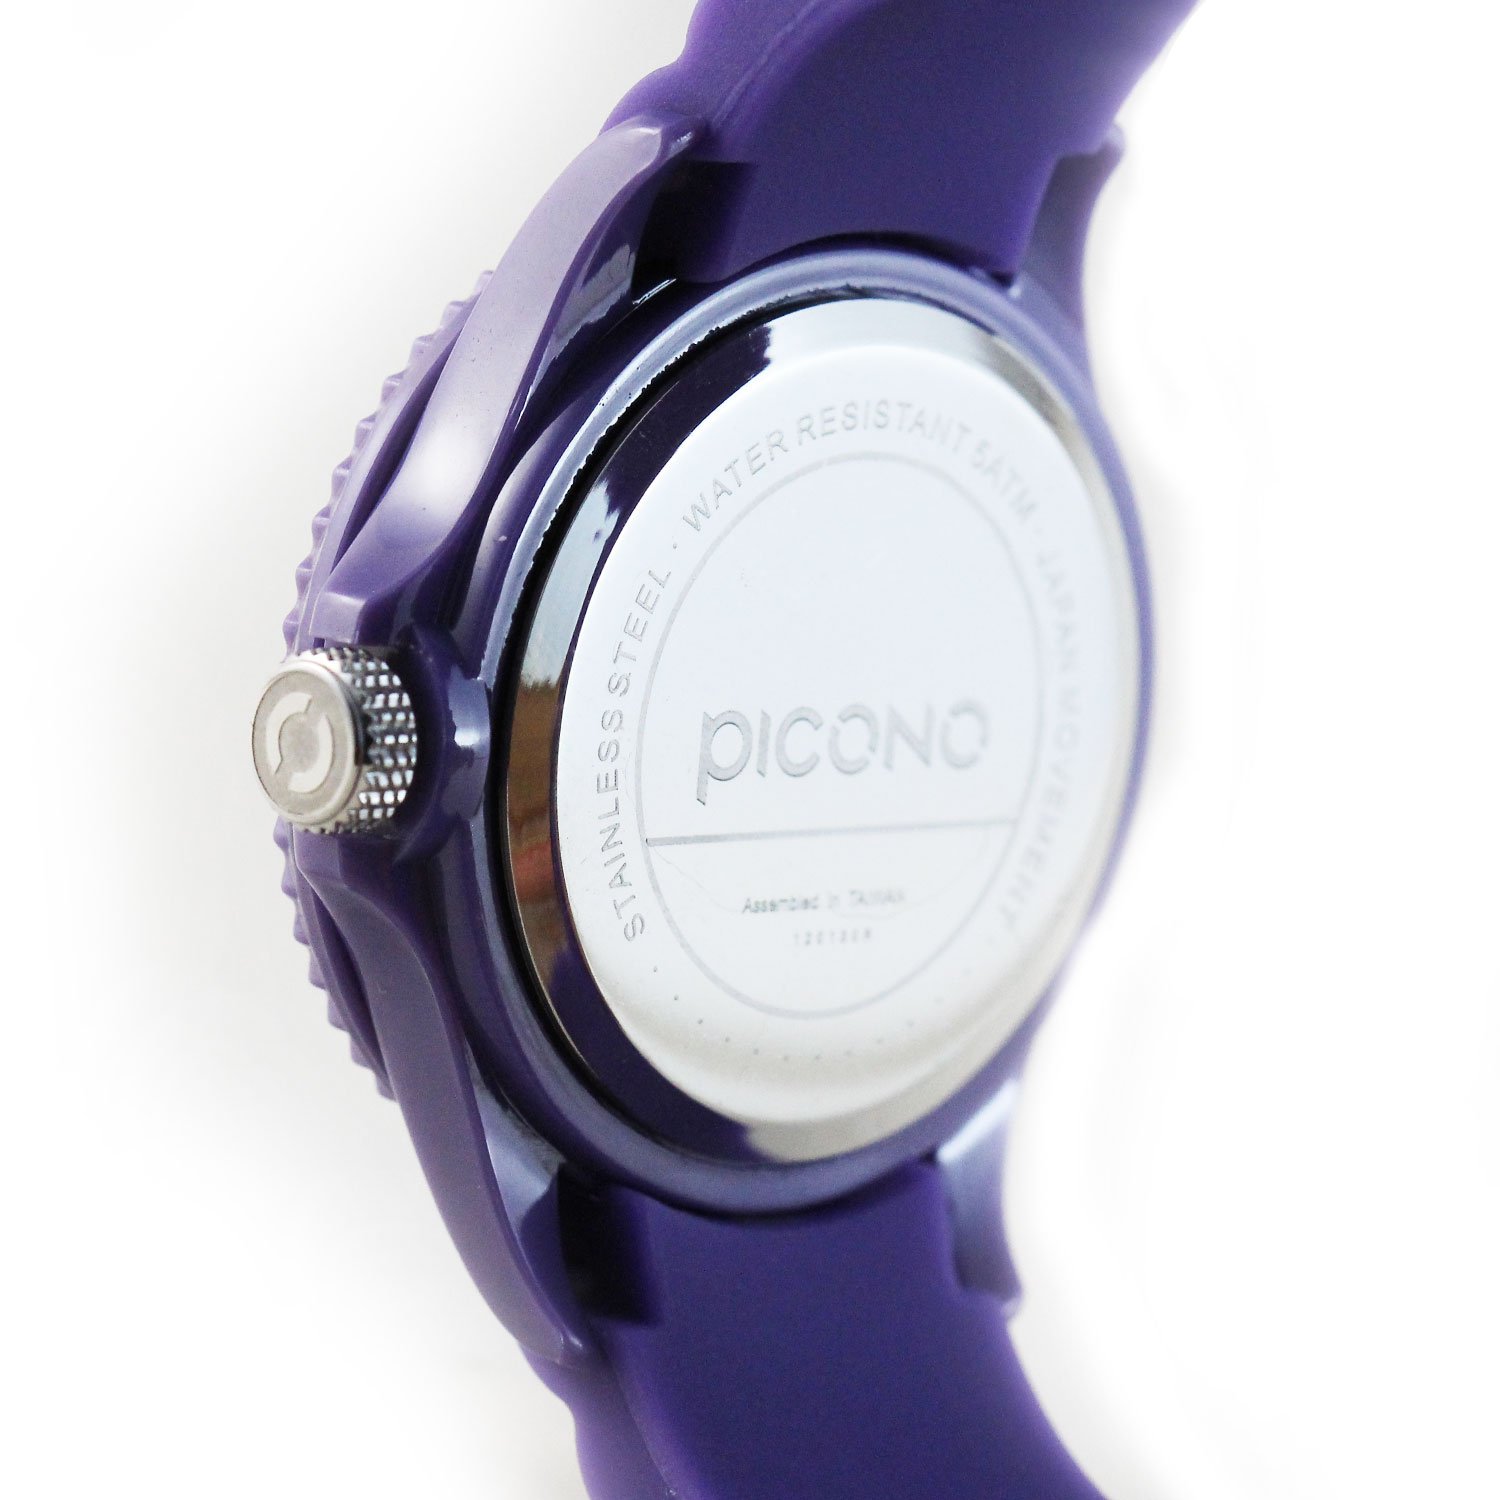 PICONO Kaleidoscope Water Resistant Analog Quartz Watch - Triangle